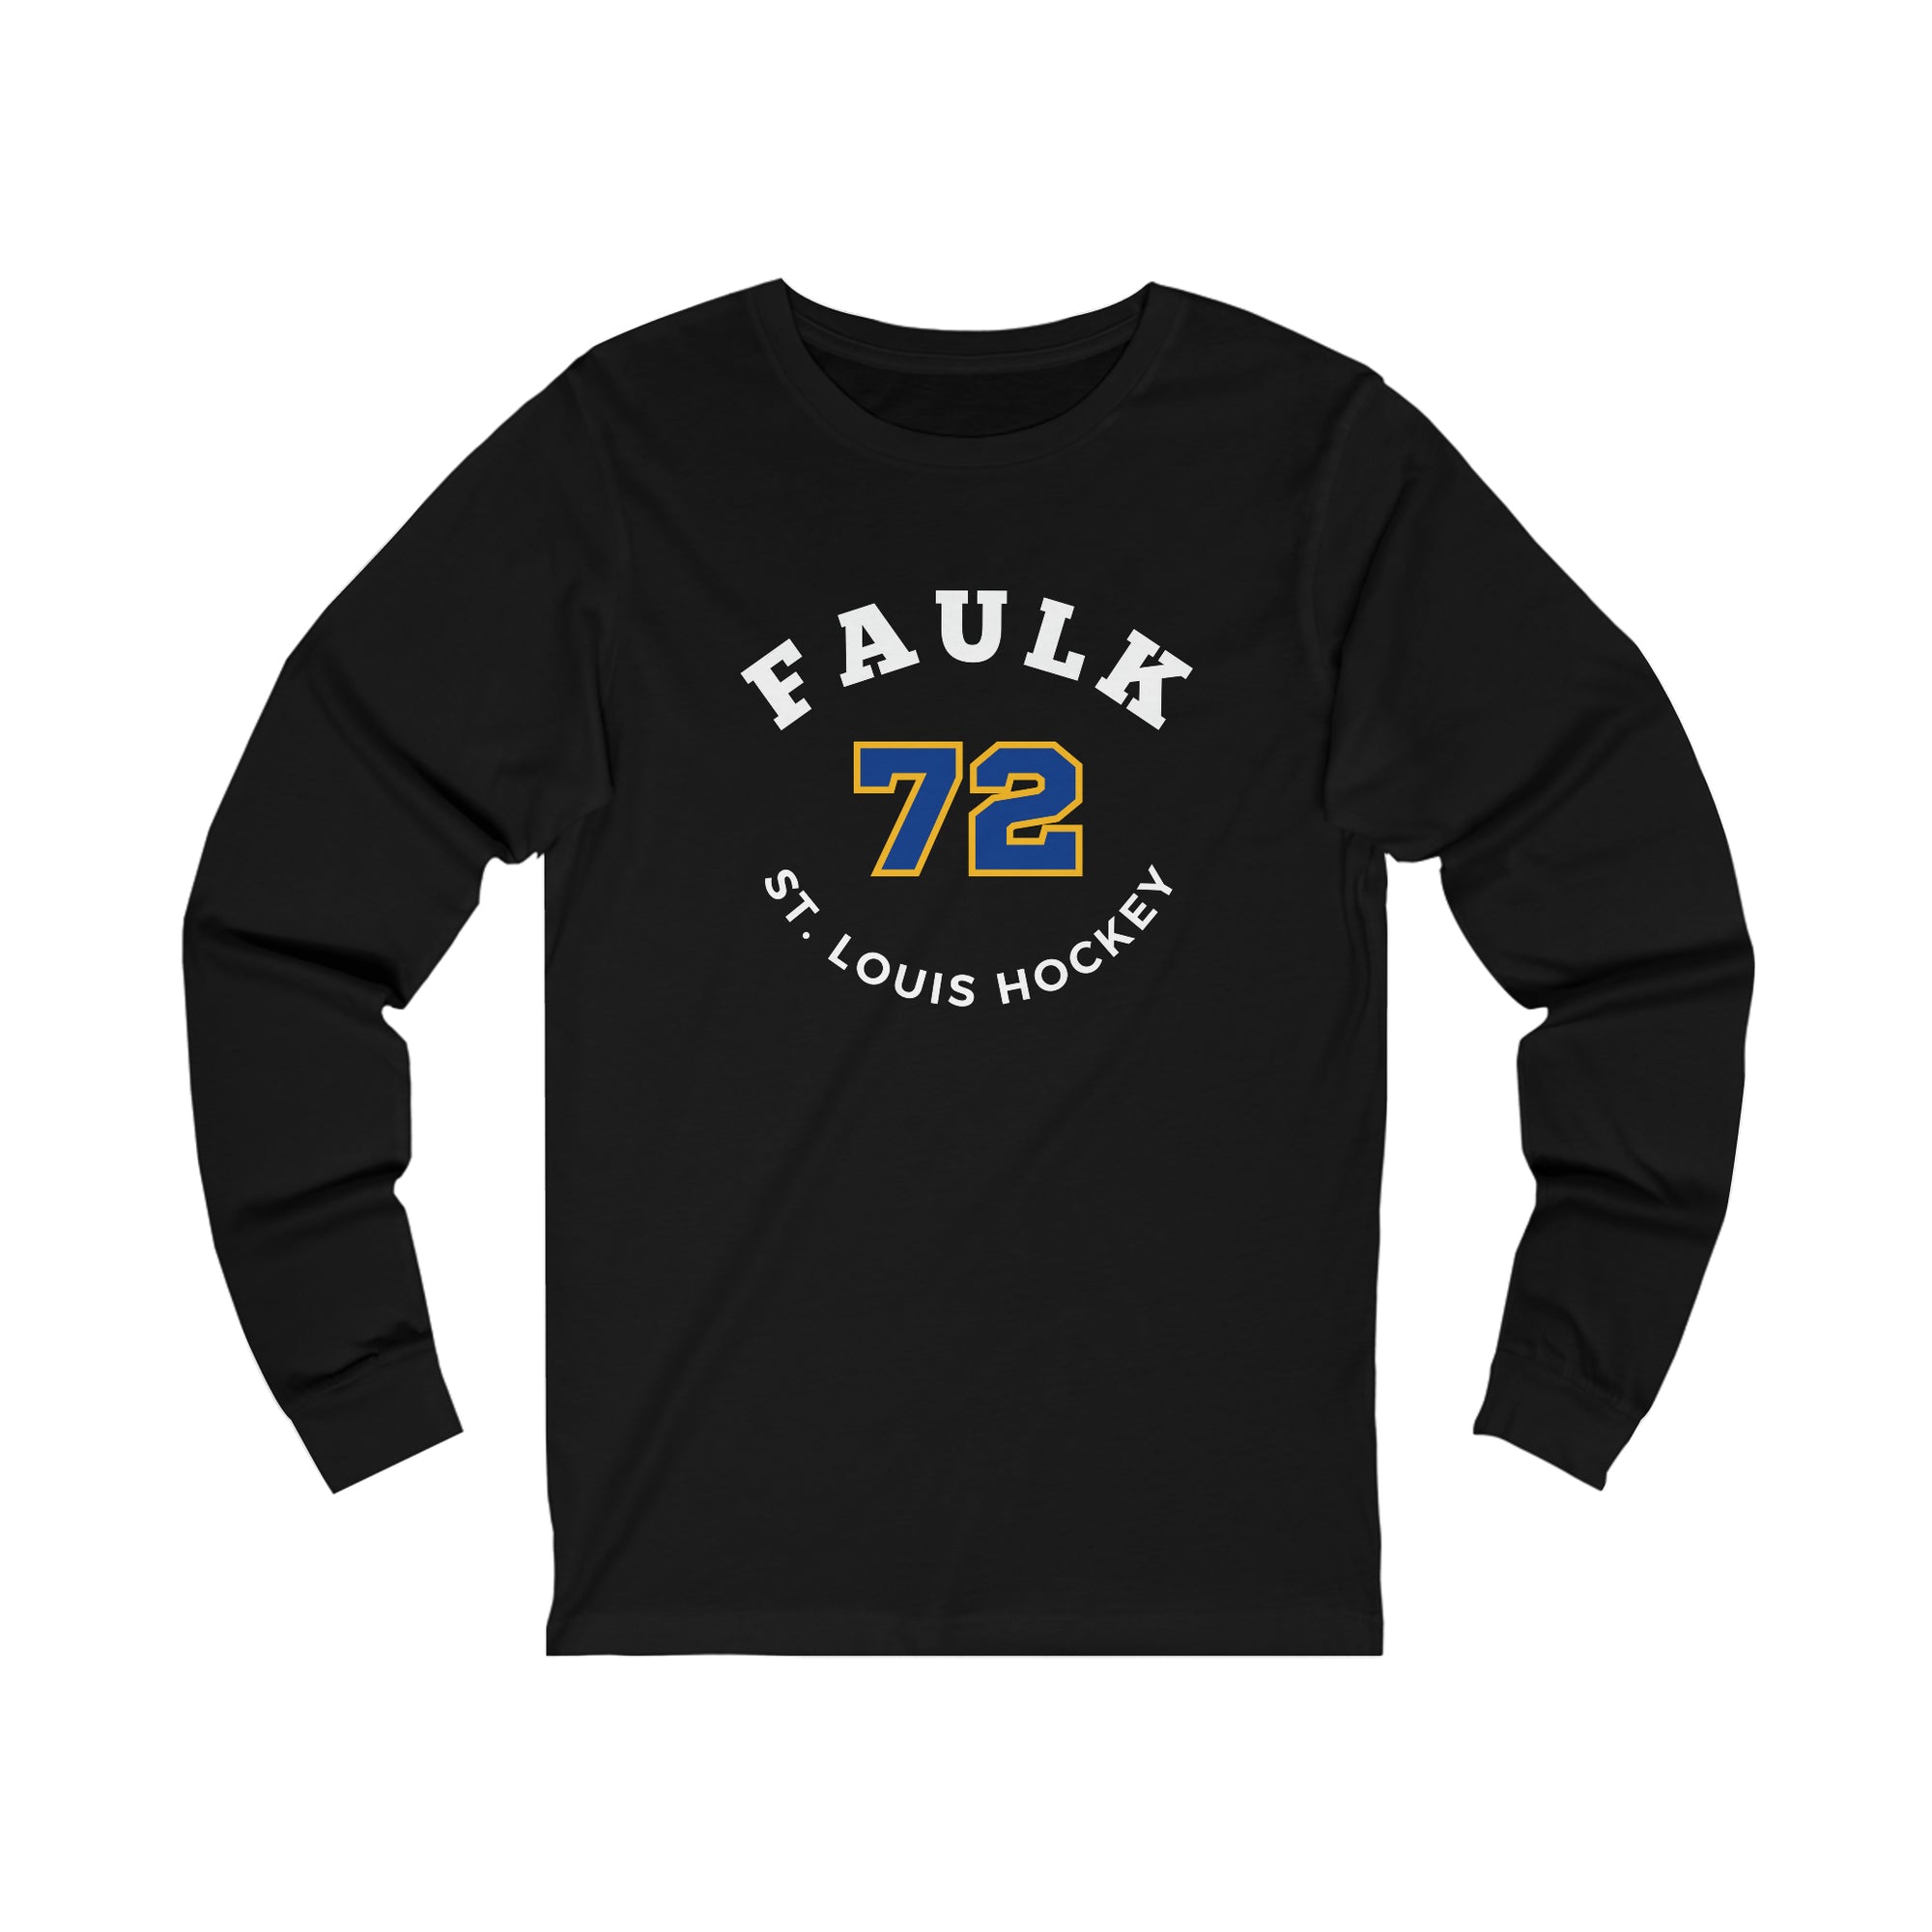 Faulk 72 St. Louis Hockey Number Arch Design Unisex Jersey Long Sleeve Shirt